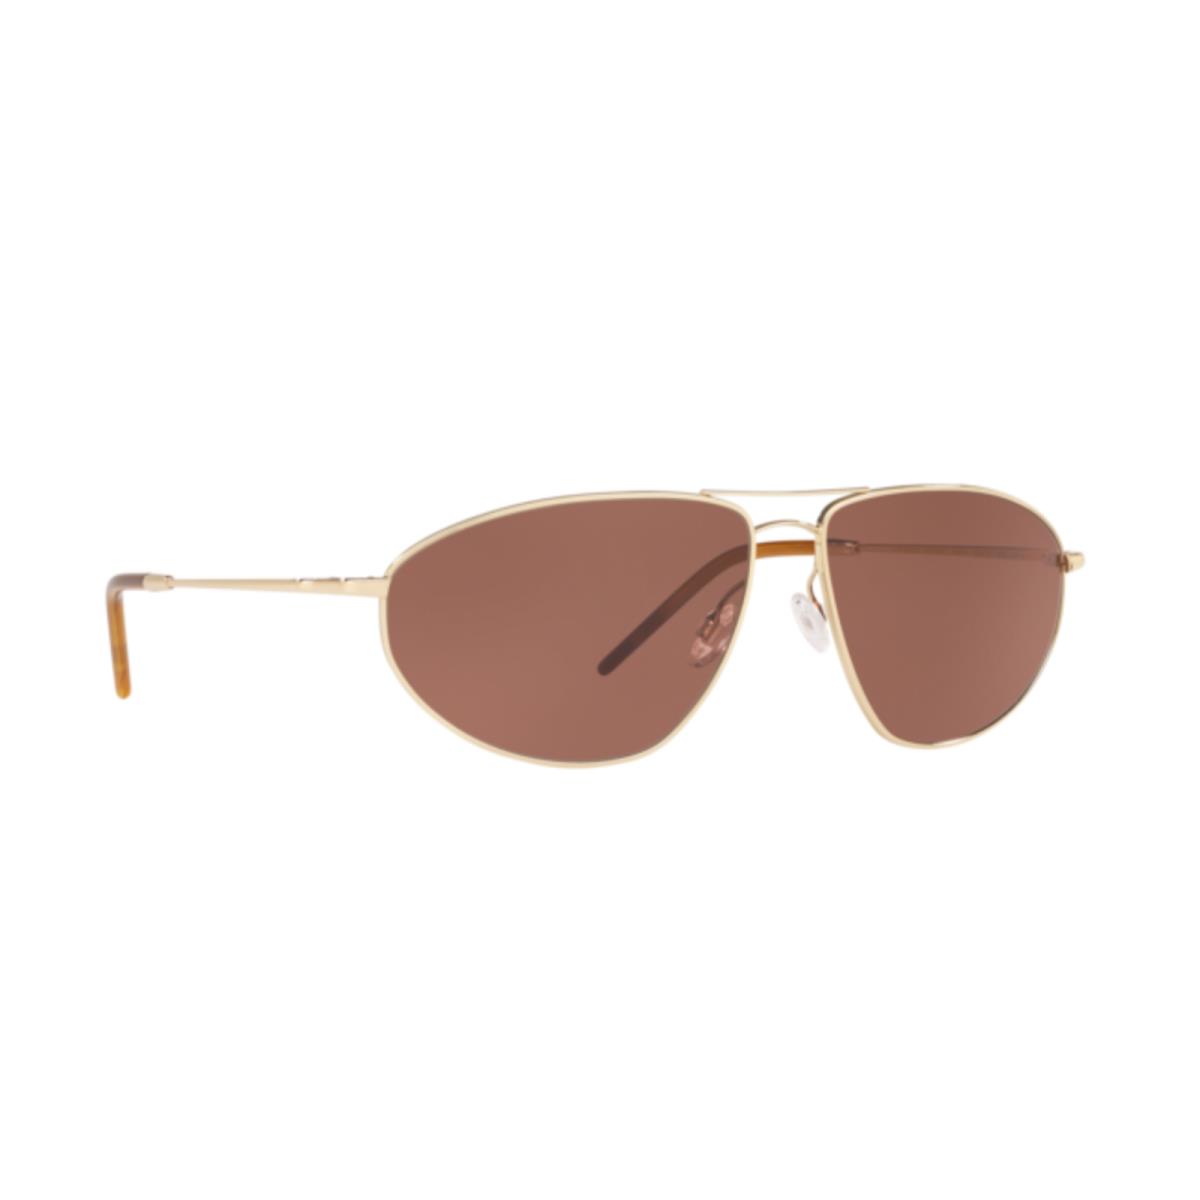 Oliver Peoples Kallen Polarized Sunglasses OV 1261-S 5035P1 Soft Gold w/G-15 - Soft Gold, Frame: Soft Gold, Lens: G-15 Grey-Green